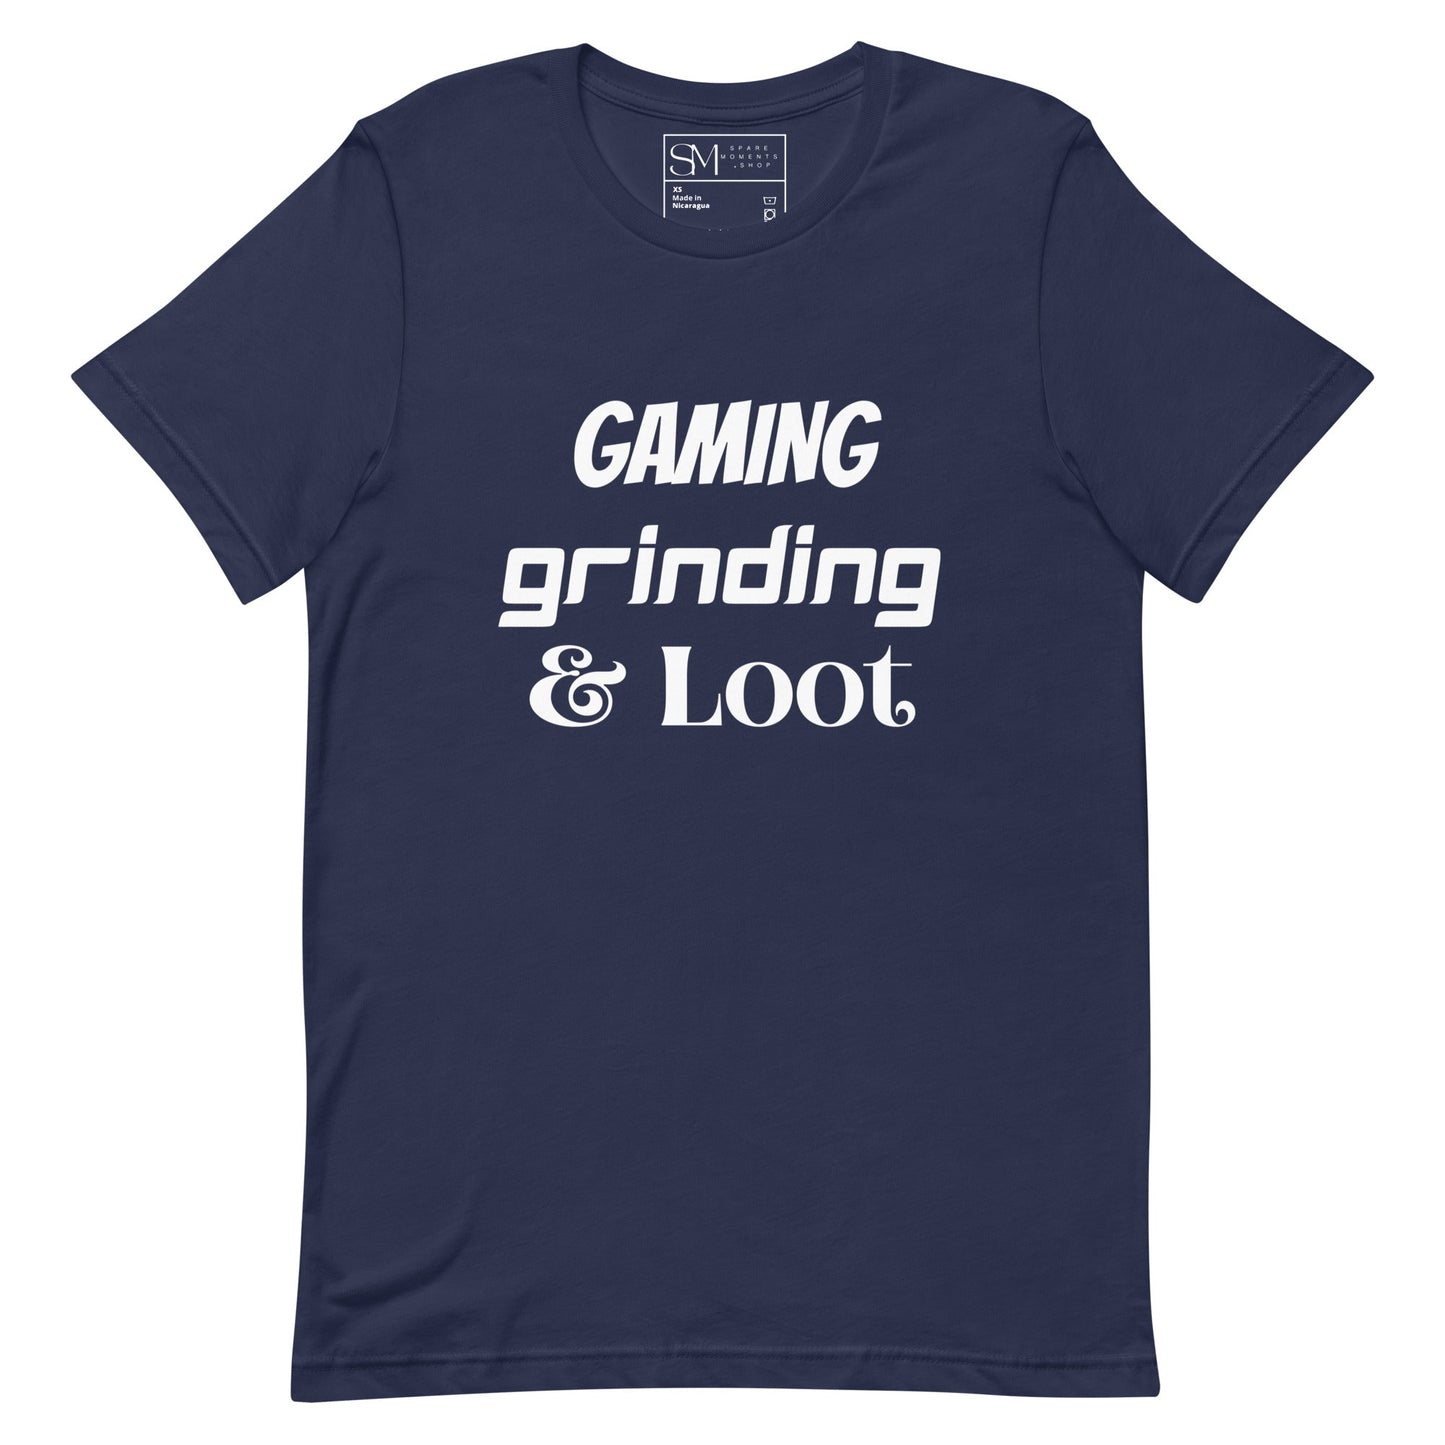 Gaming Grinding & Loot | Unisex t-shirt